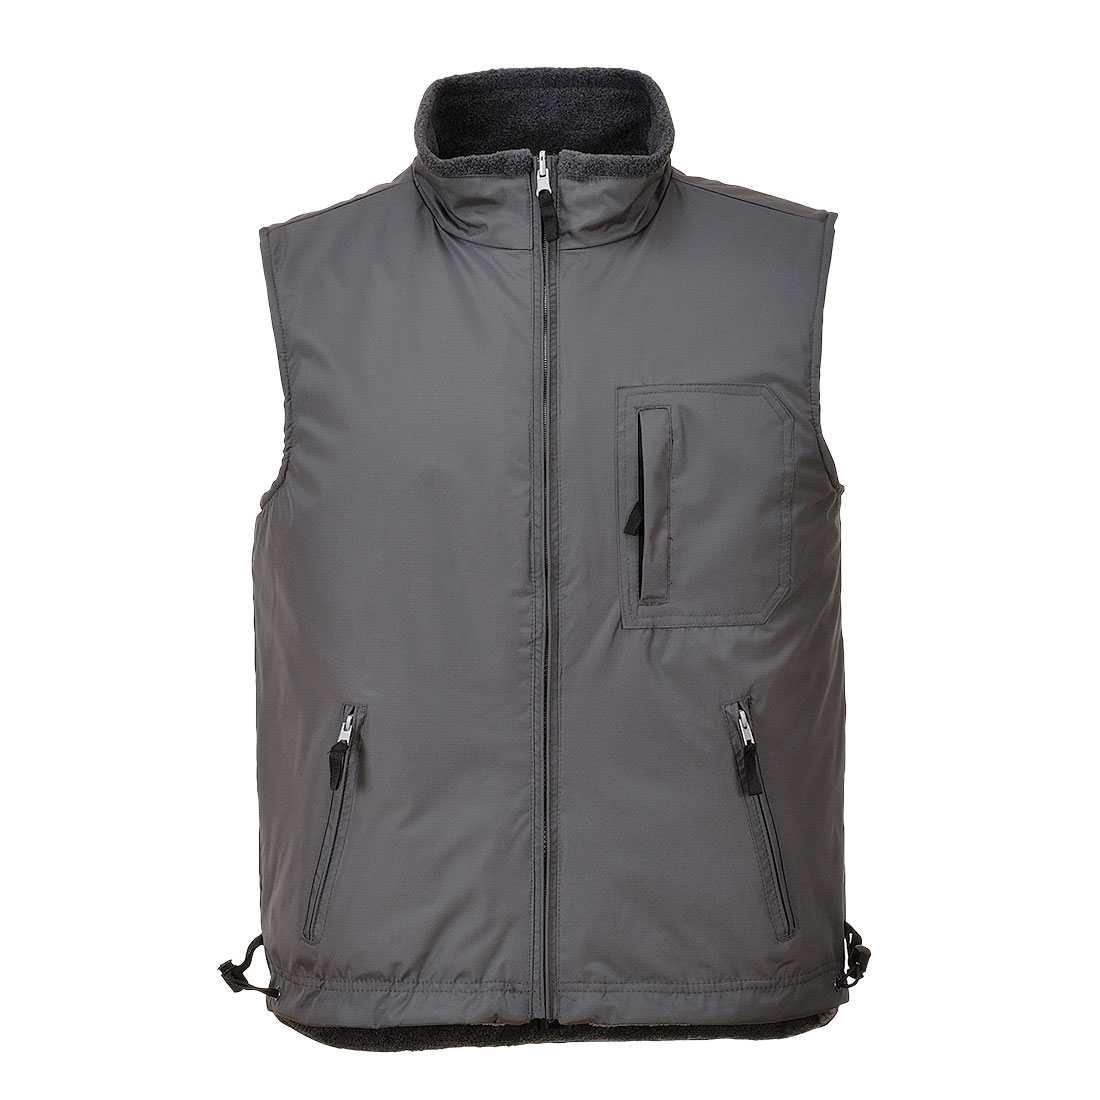 RS Reversible Bodywarmer Vest, Grey       Size Medium R/Fit